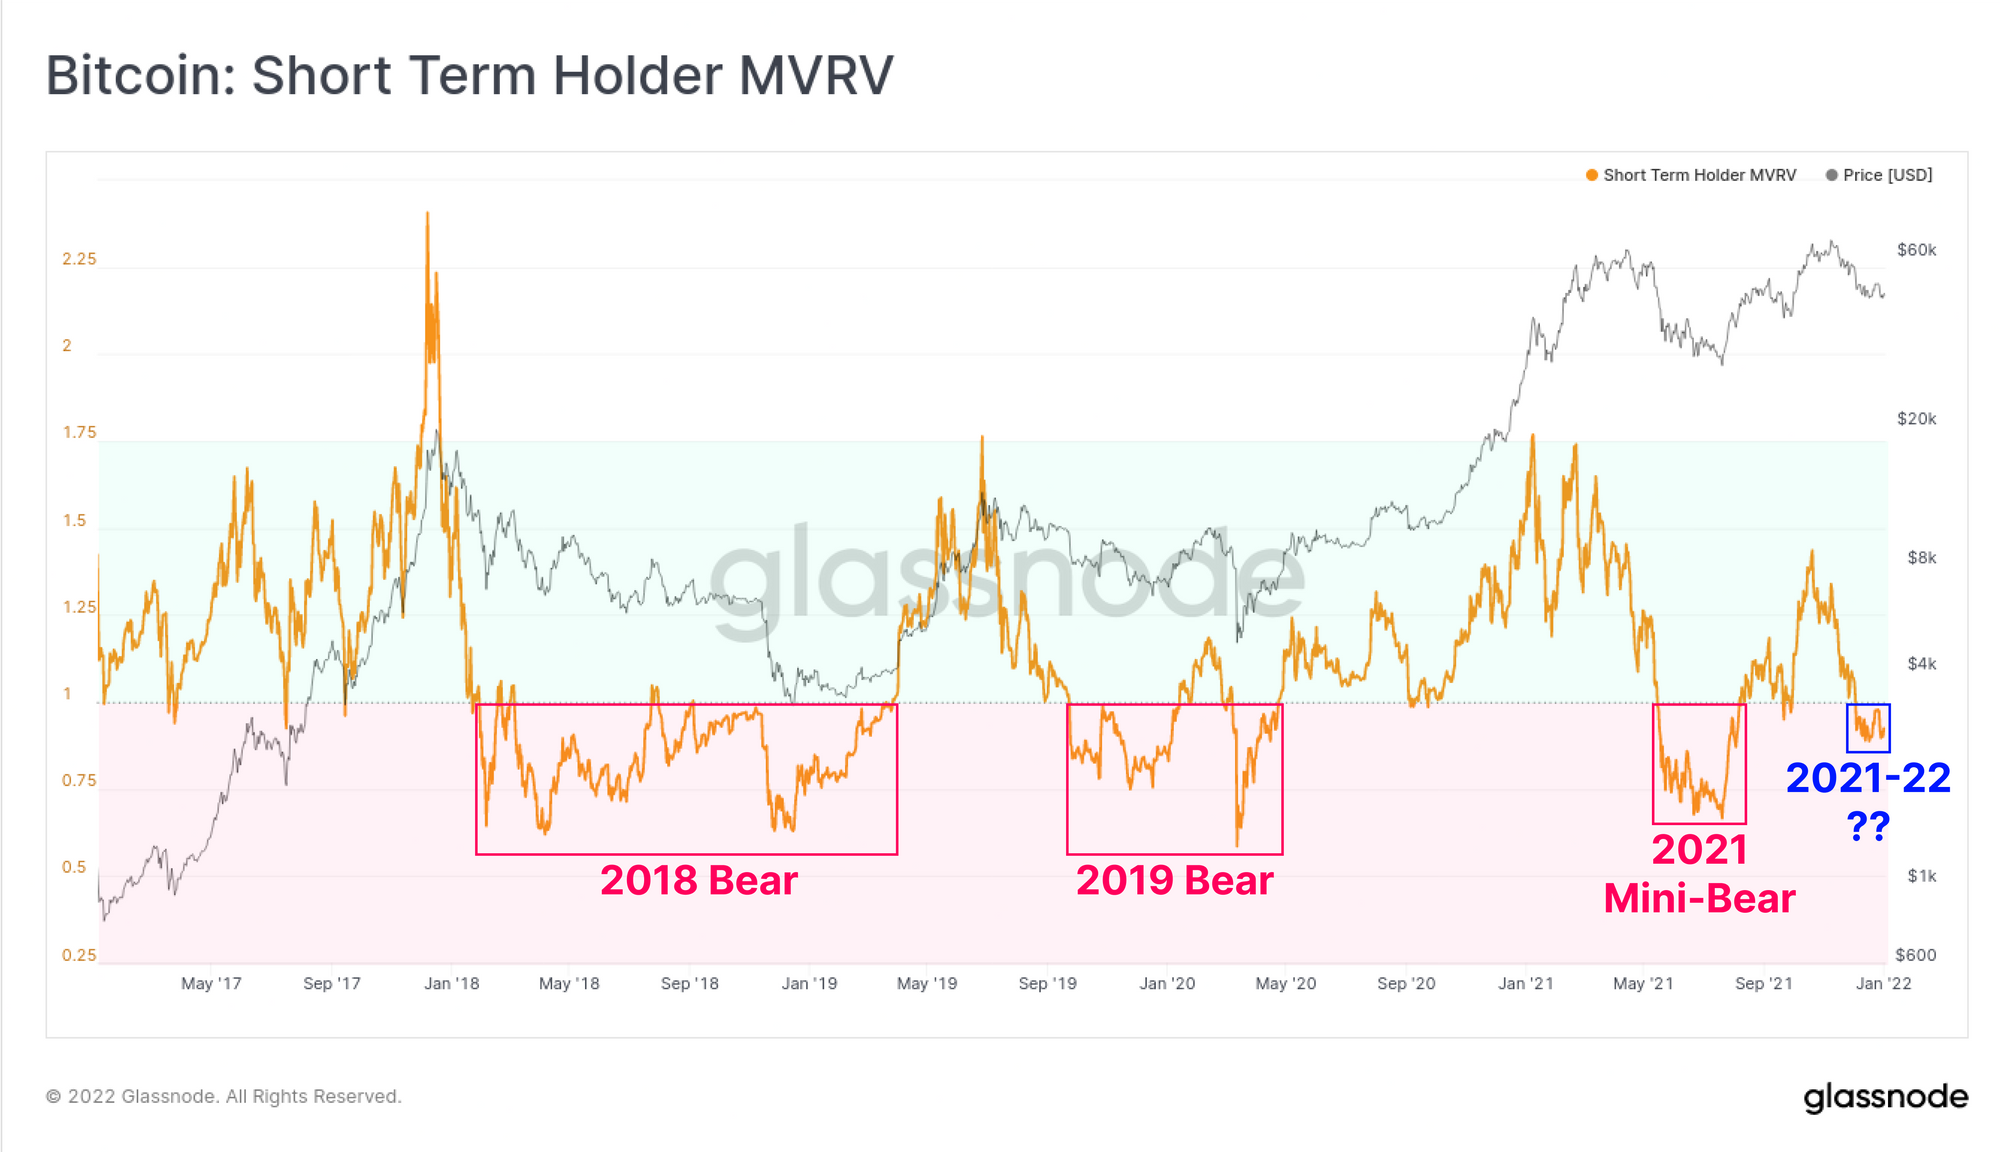 Bitcoin Short-Term Holder MVRV